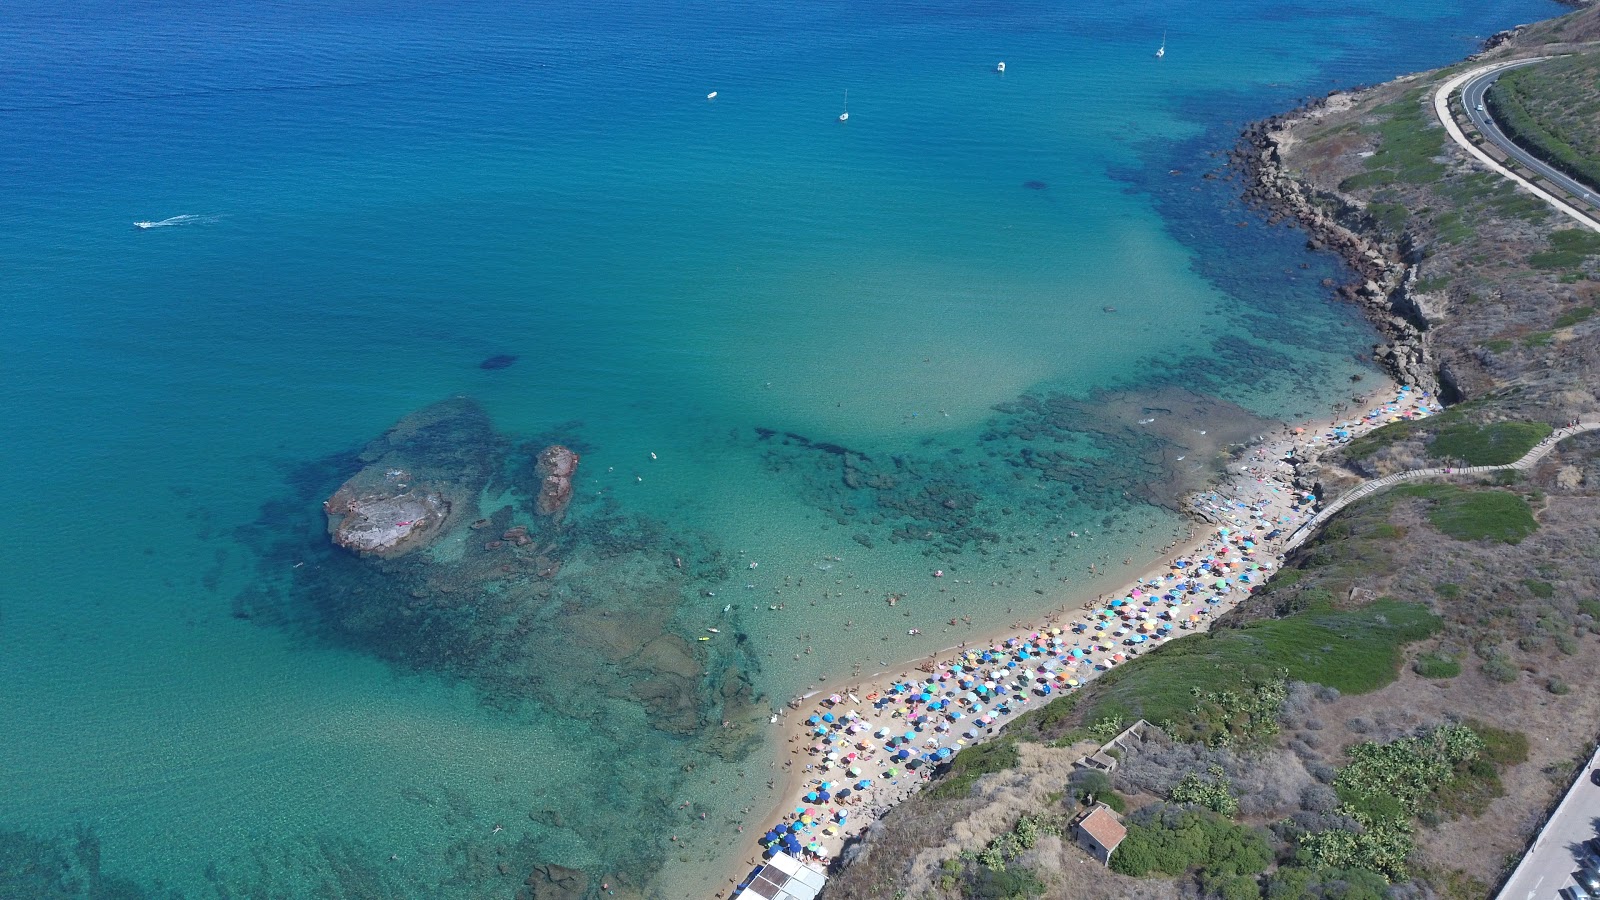 Fotografija Spiaggia di Ampurias z turkizna čista voda površino